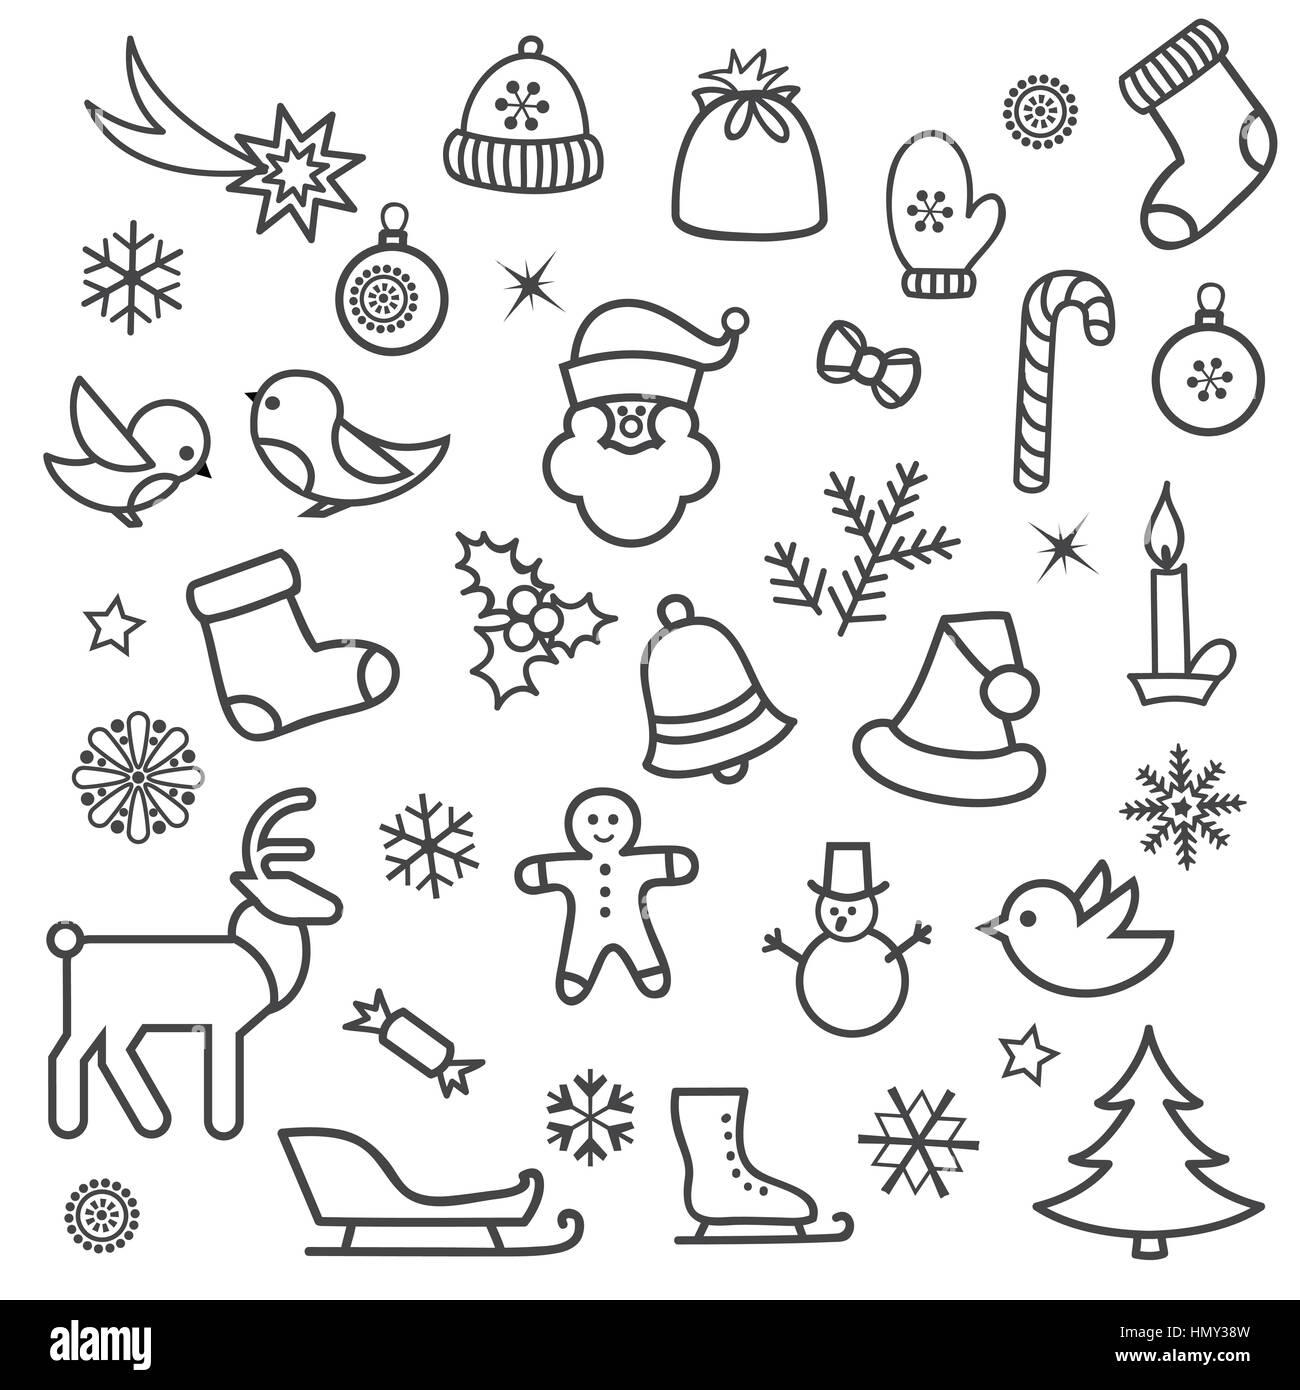 Christmas icon set. Doodle winter holiday decorative design elements ...